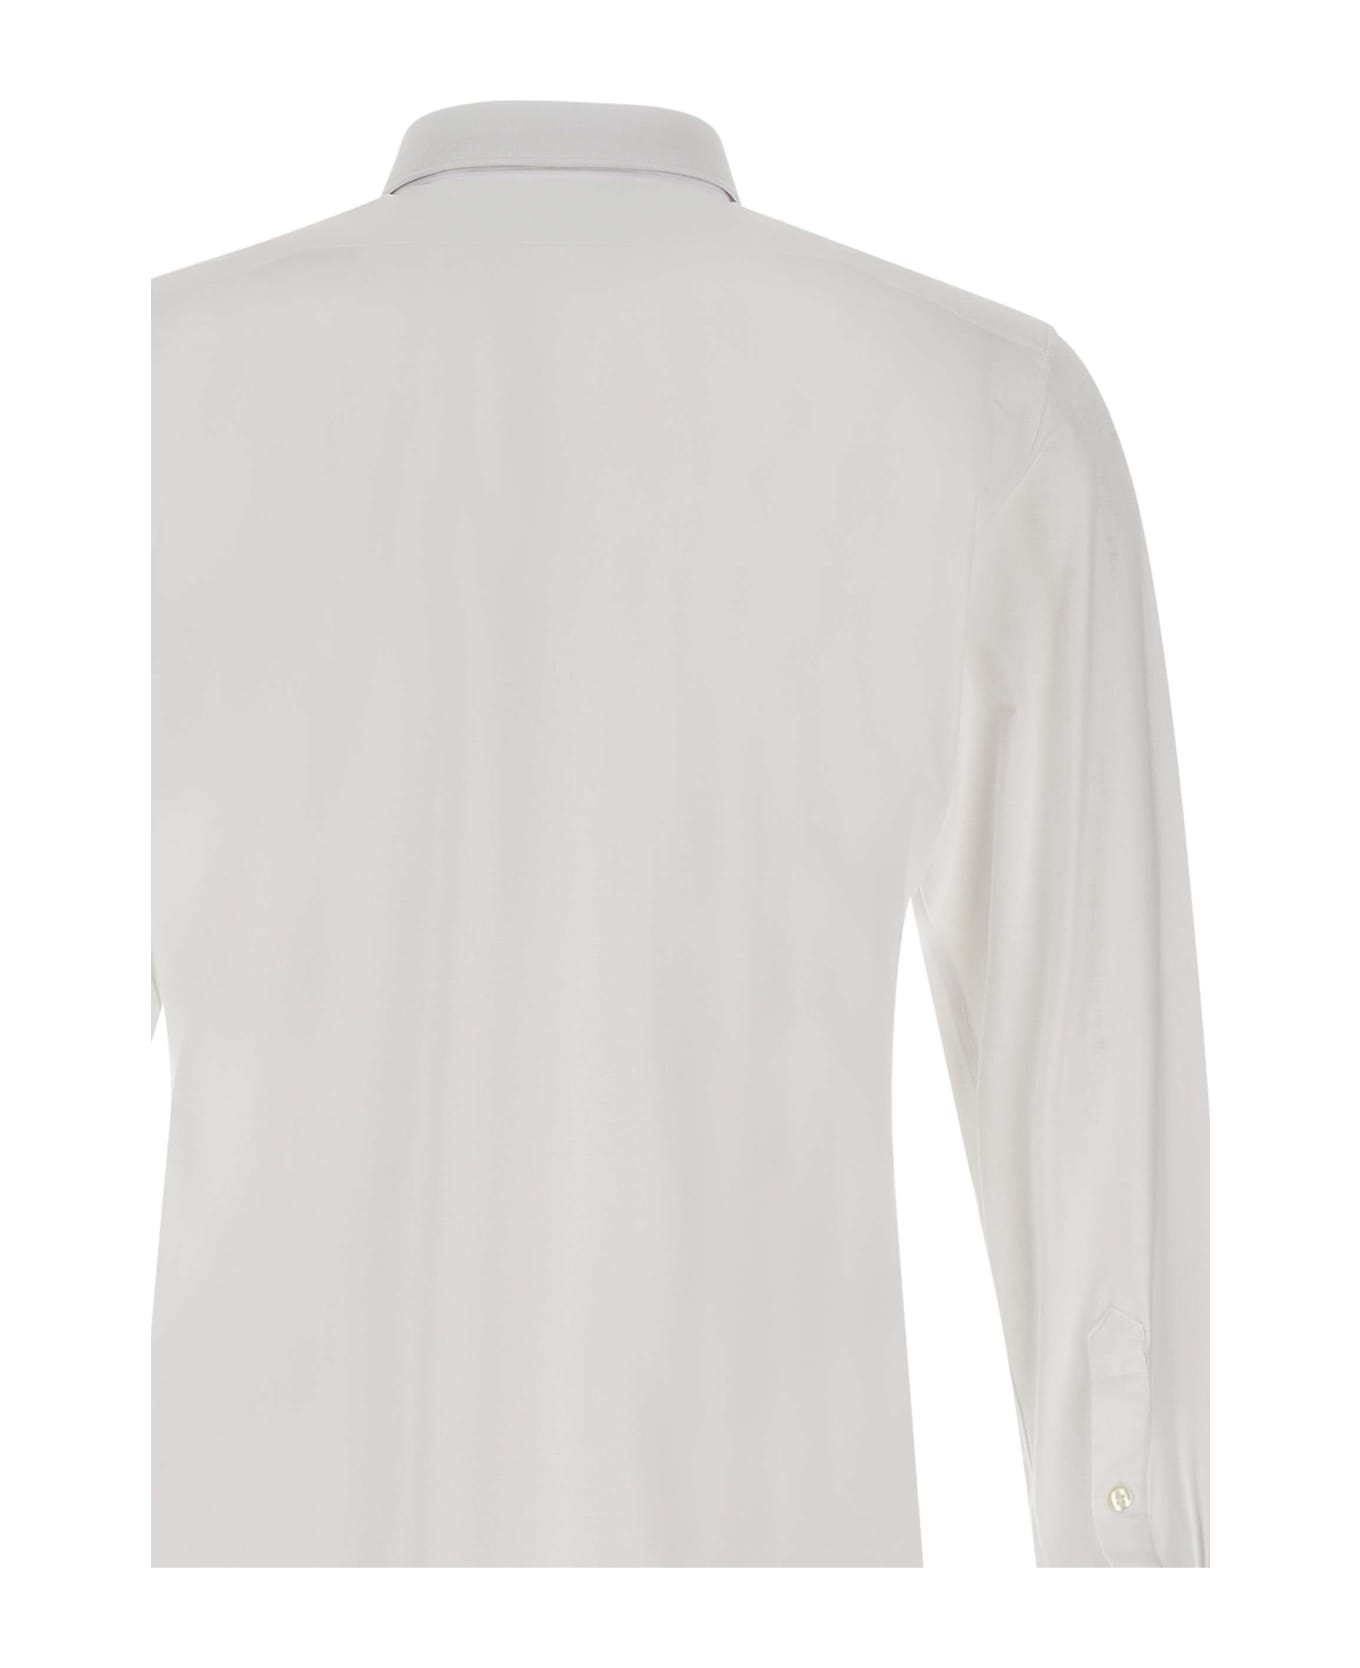 RRD - Roberto Ricci Design "oxford Open" Shirt - WHITE シャツ